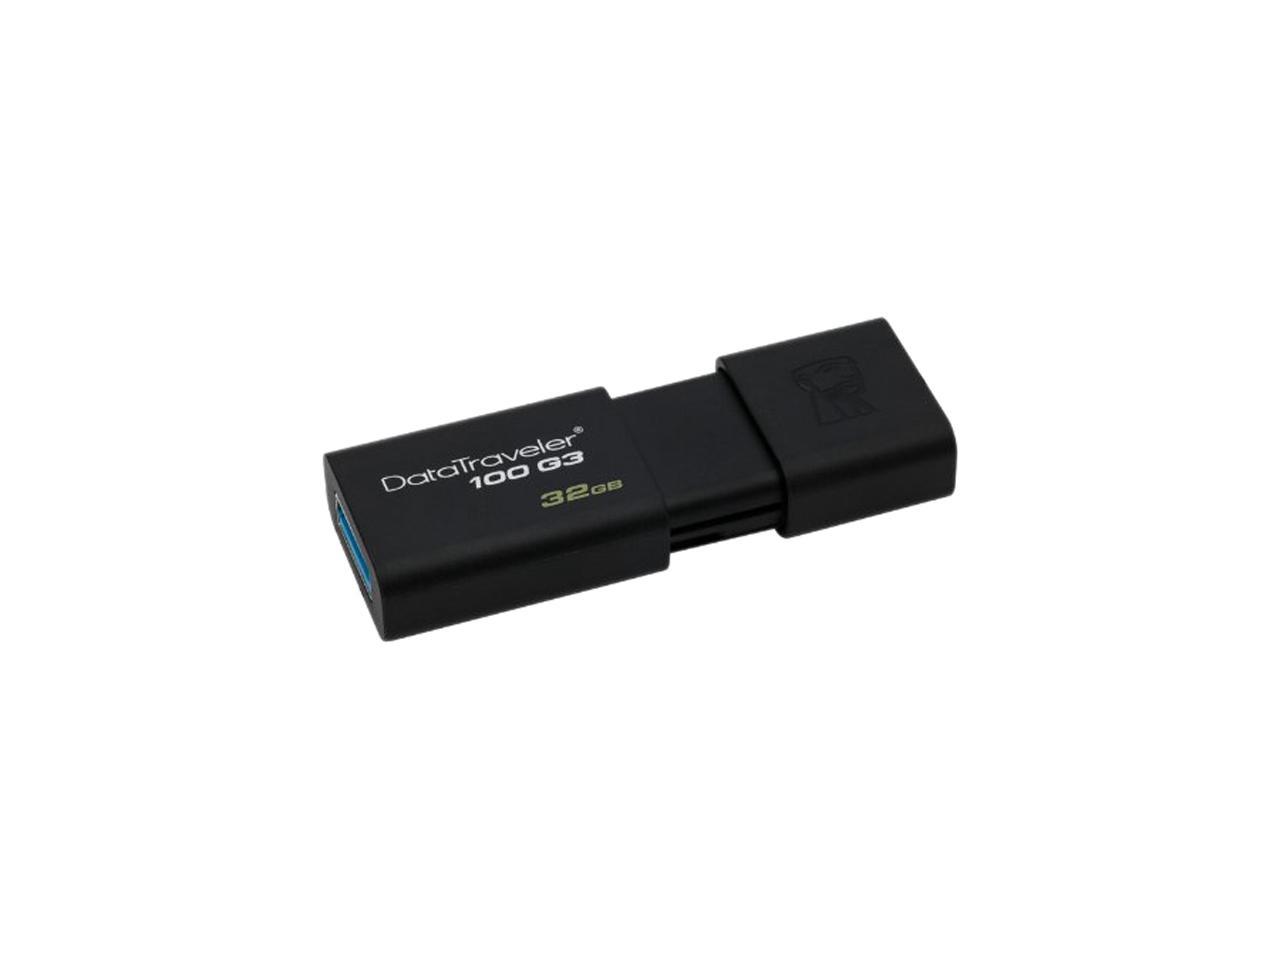 Kingston 32GB DataTraveler 100 G3 USB 3.0 Flash Drive (DT100G3/32GB)